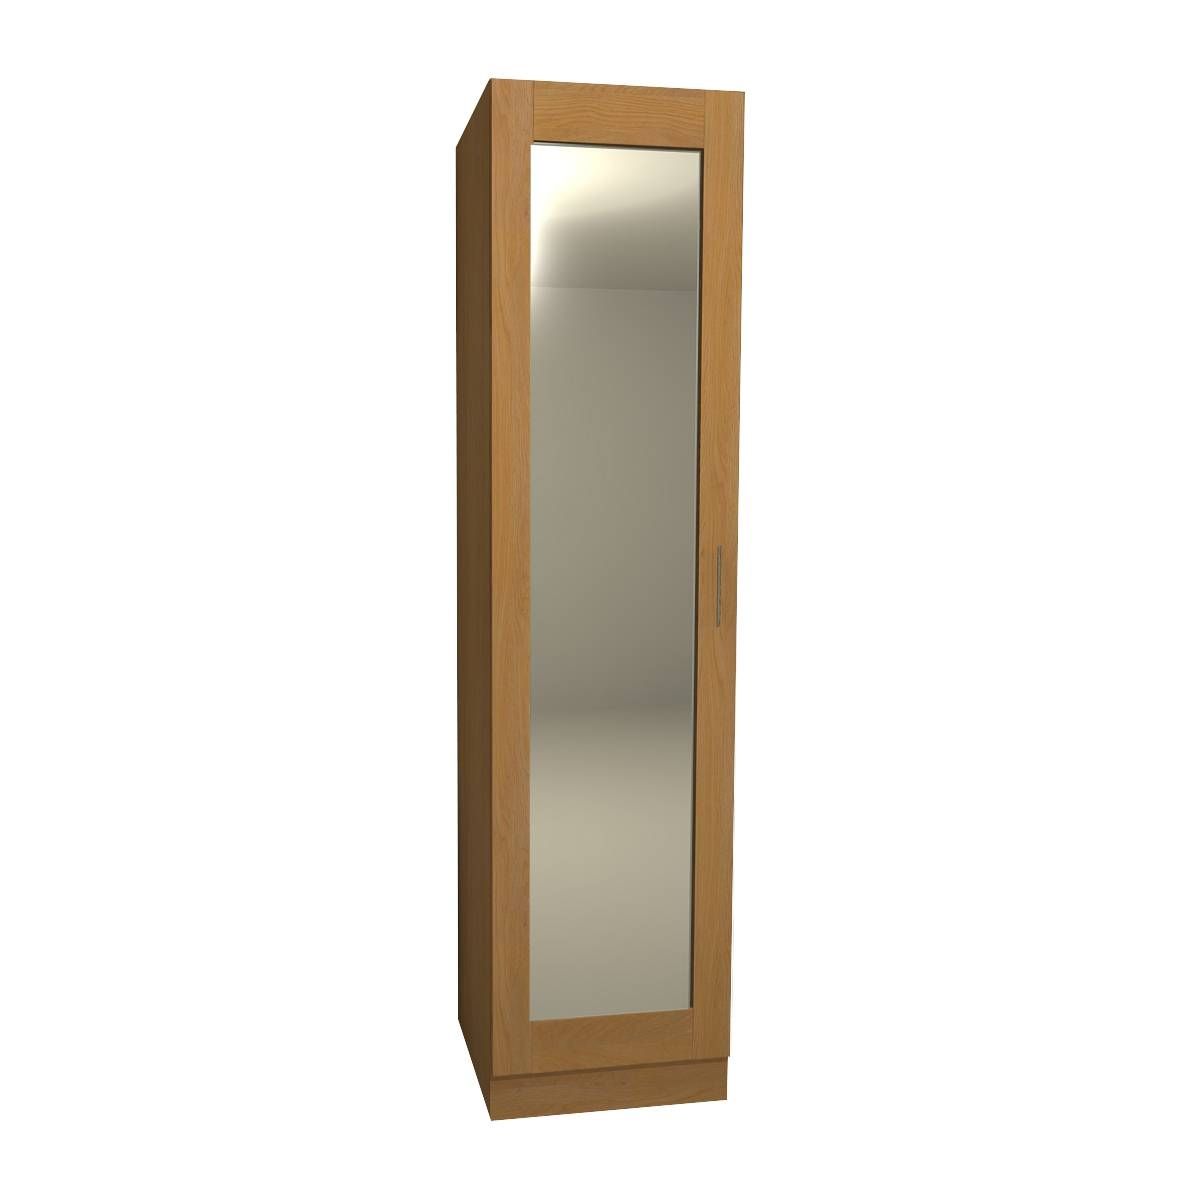 Single Mirrored Wardrobe No Drawers 2040mm High – Shaker Solid In Single Door Mirrored Wardrobes (View 15 of 15)